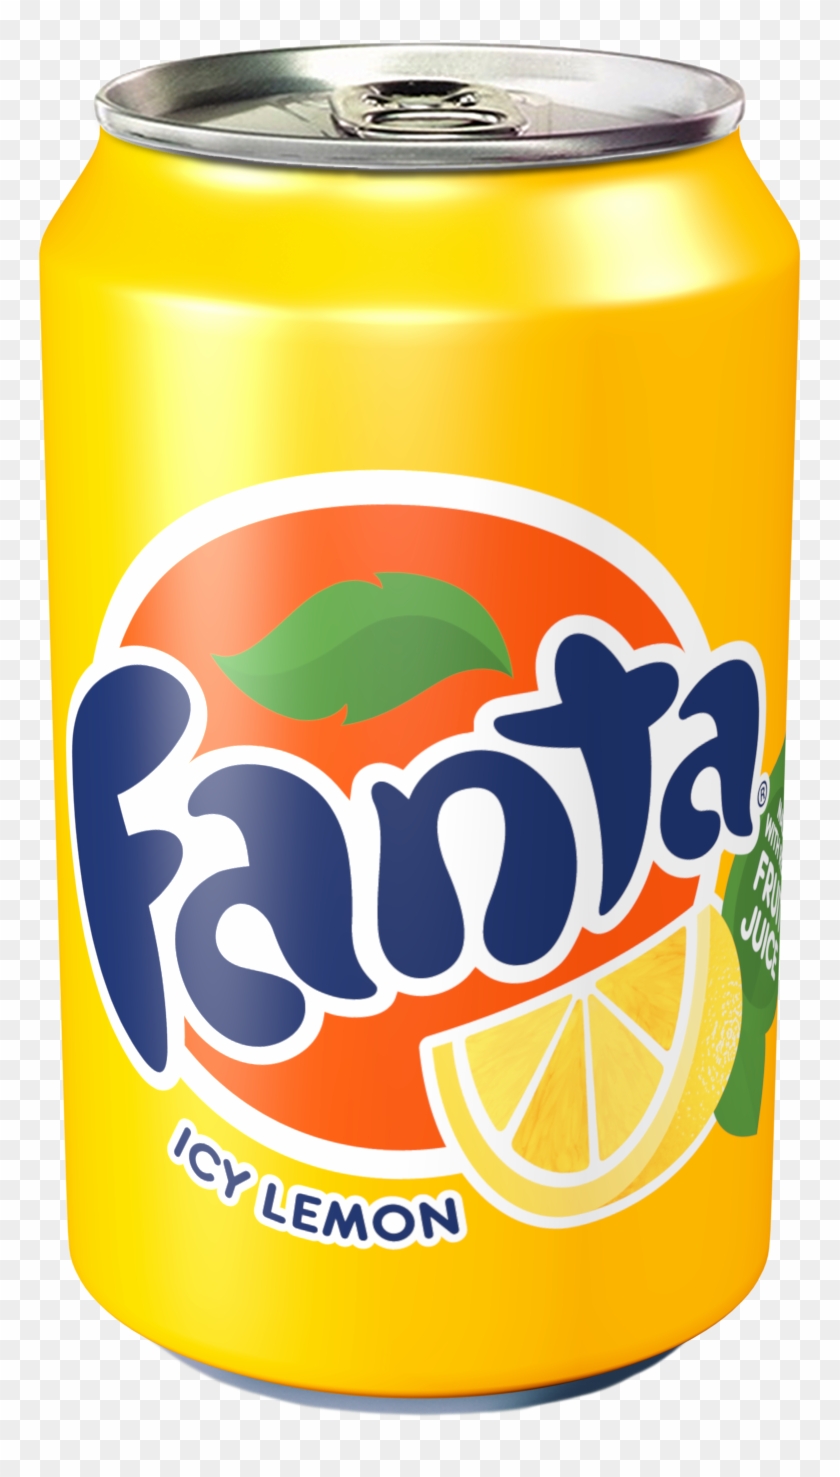 Vueqc Fanta Icy Lemon 330ml Can - Fanta Lemon Can Png Clipart